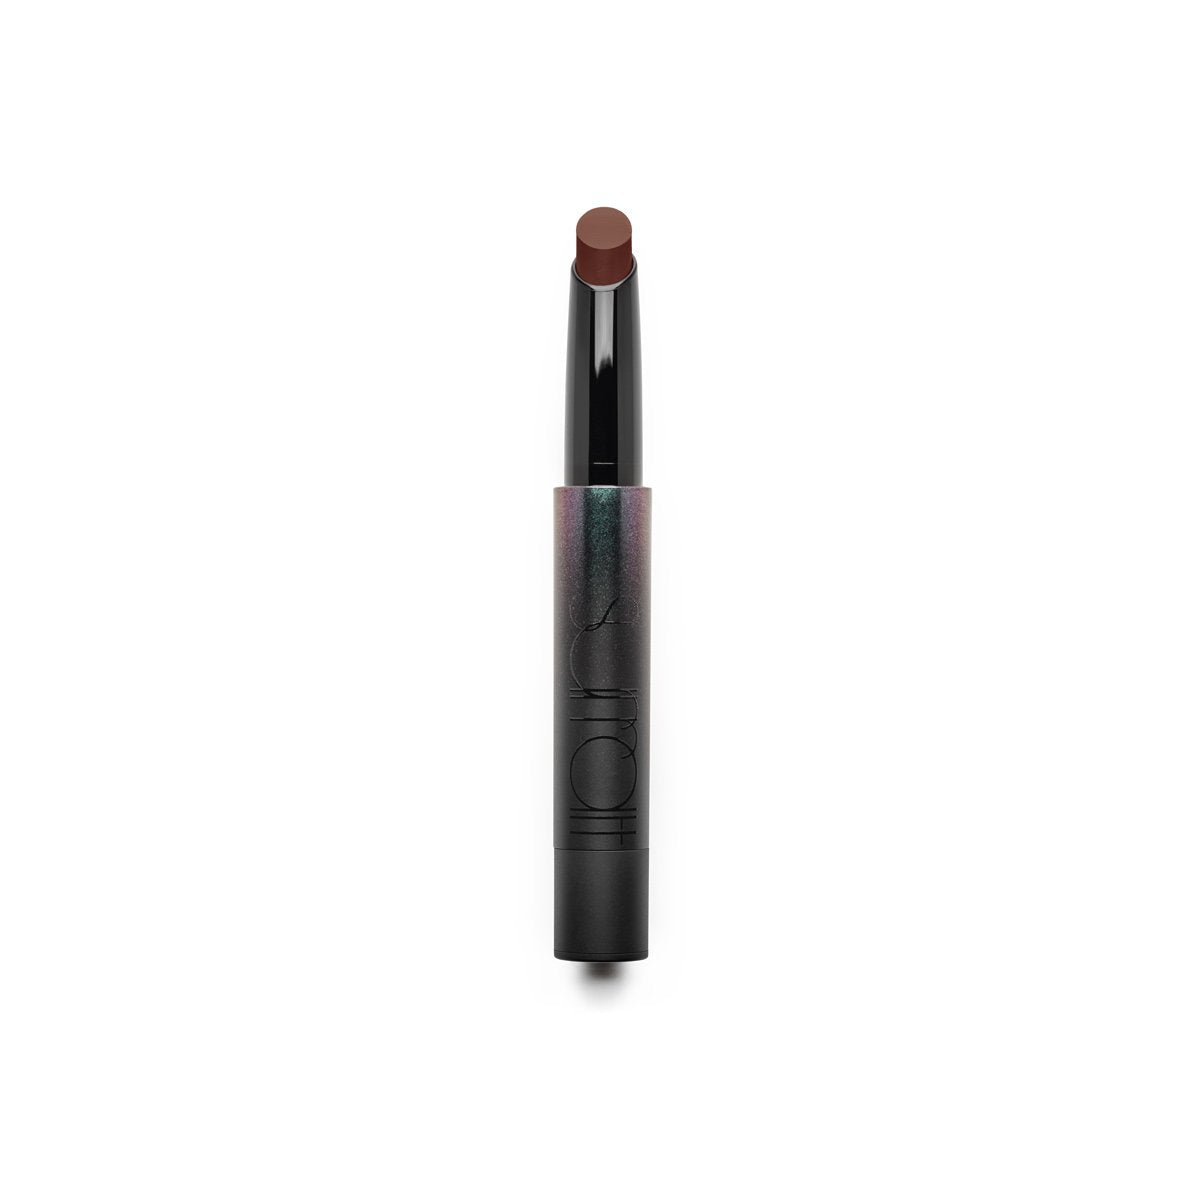 AU COURANT - SHEER BLACKBERRY - creamy moisturizing lipstick lip balm in sheer blackberry shade